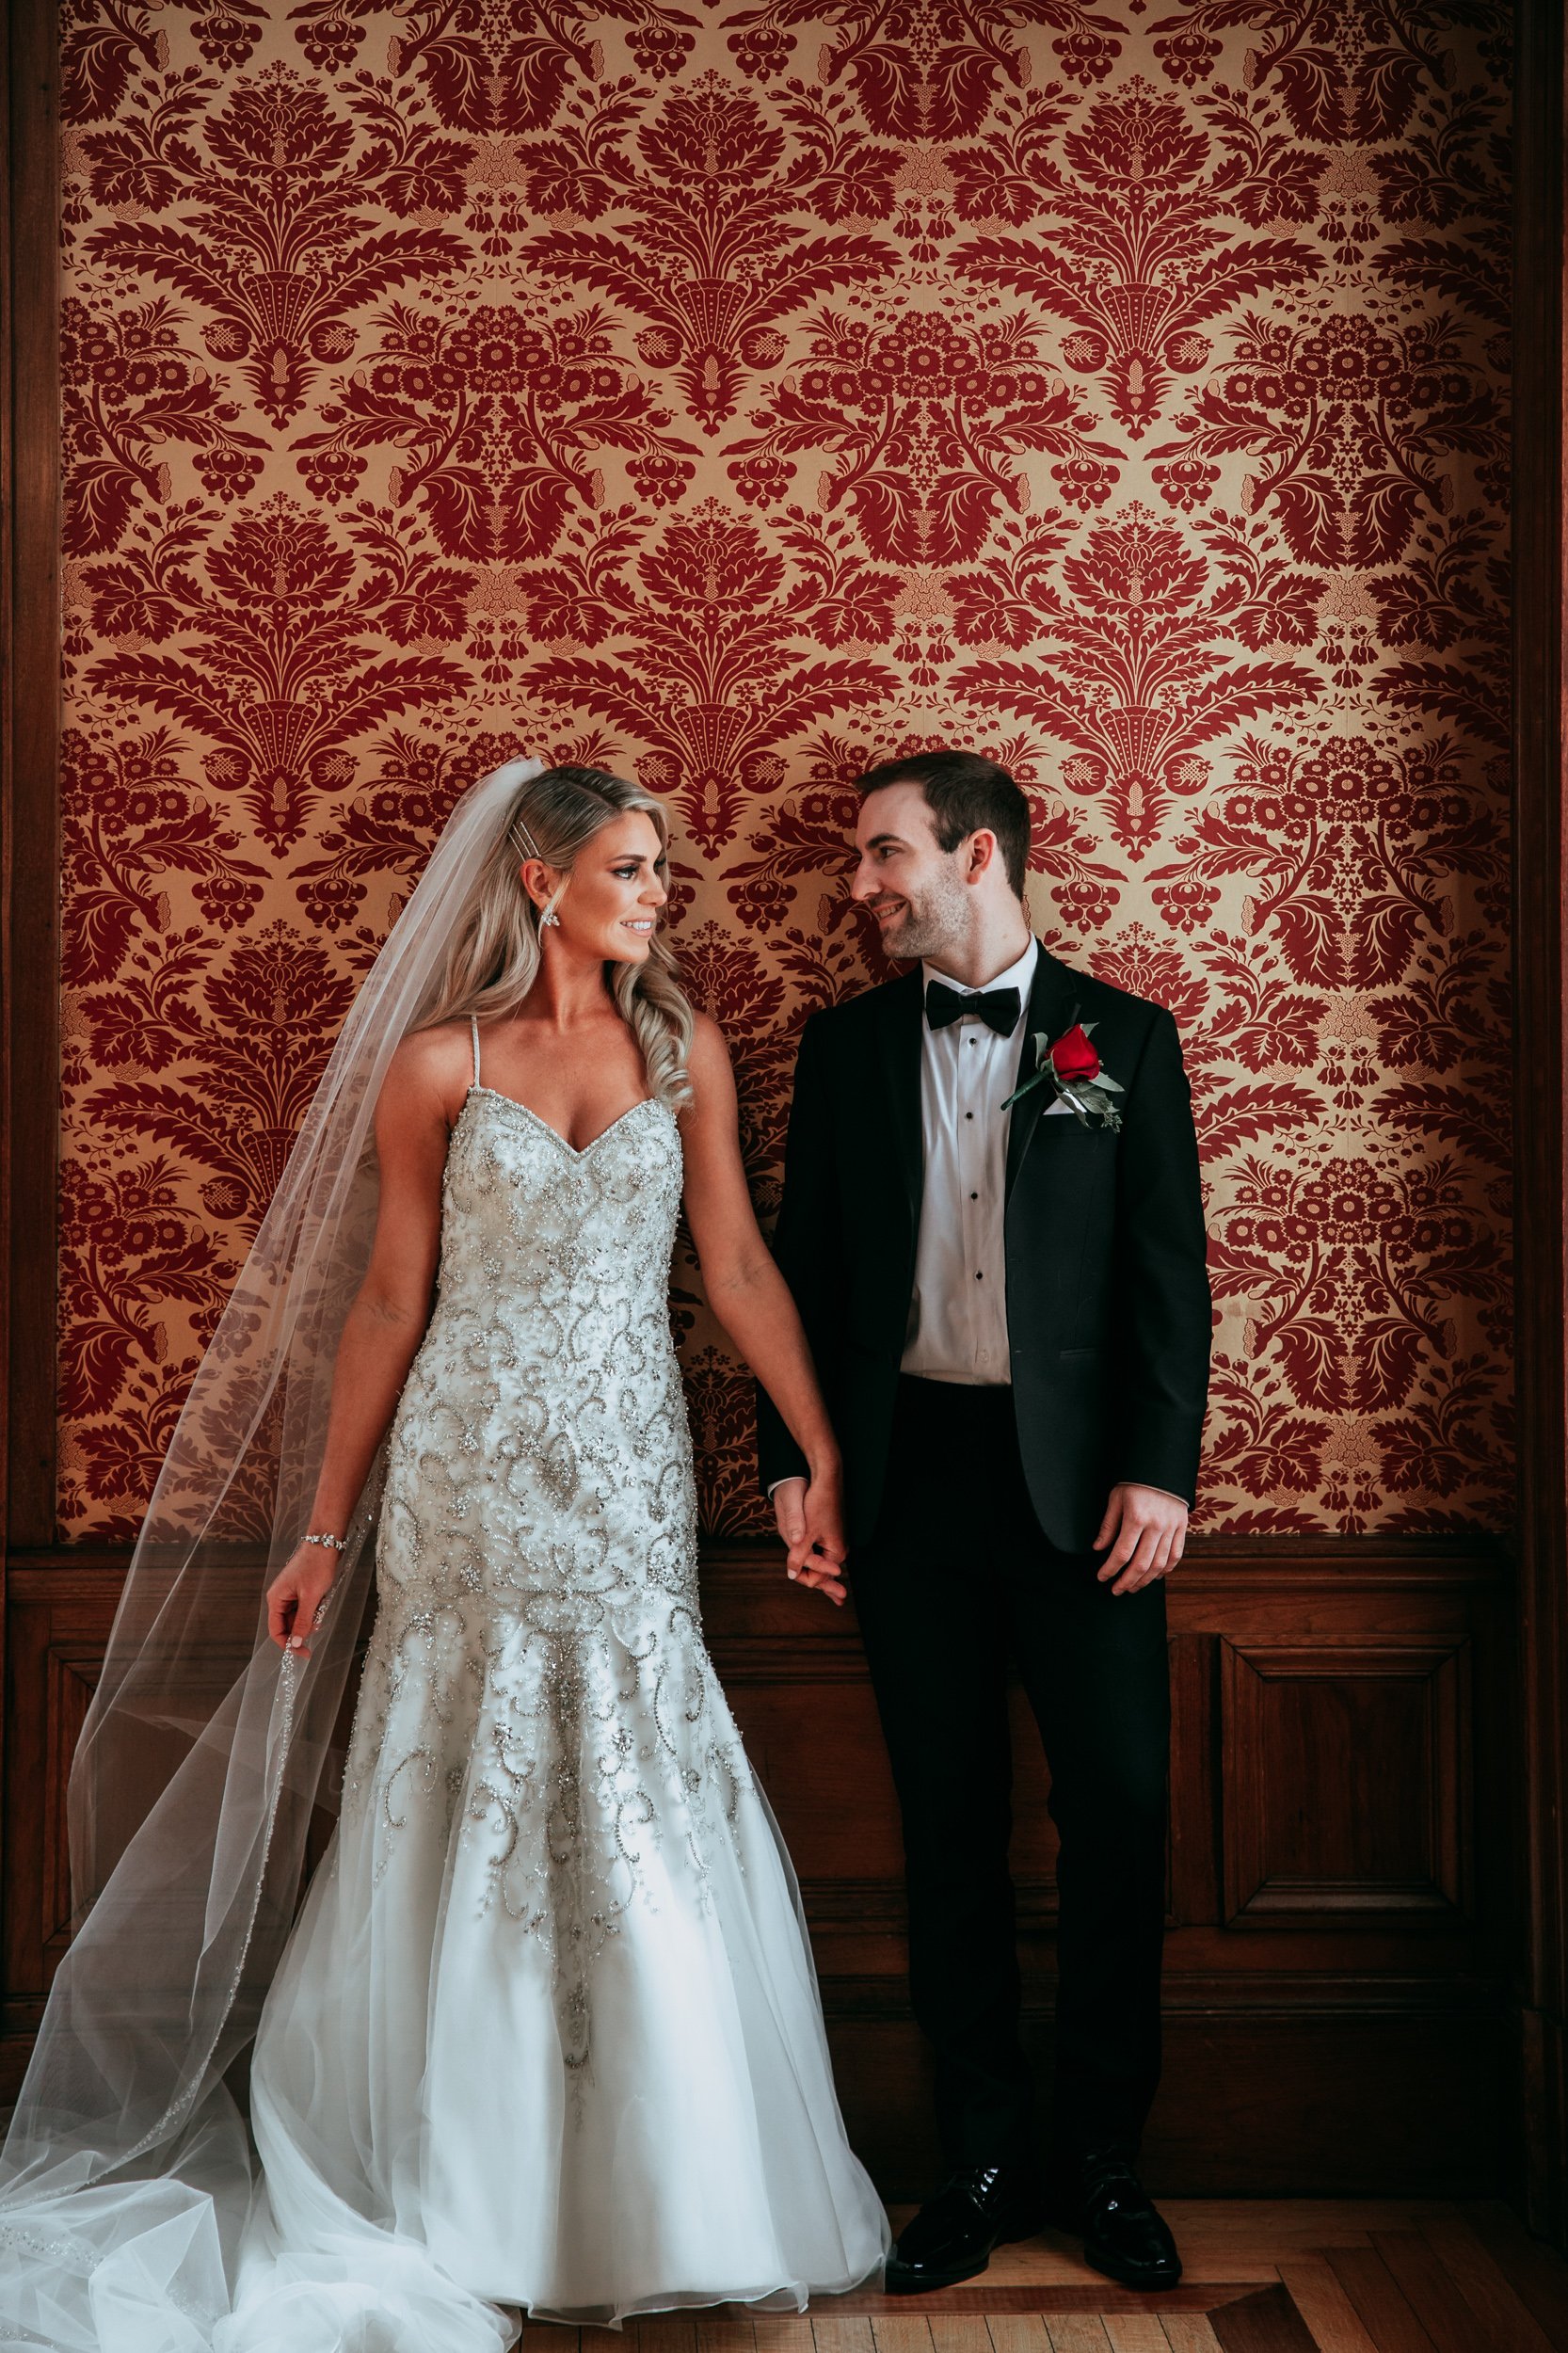 LUCEINS MANOR WEDDING PHOTOGRAPHY - FEB 2021 - 41.jpg